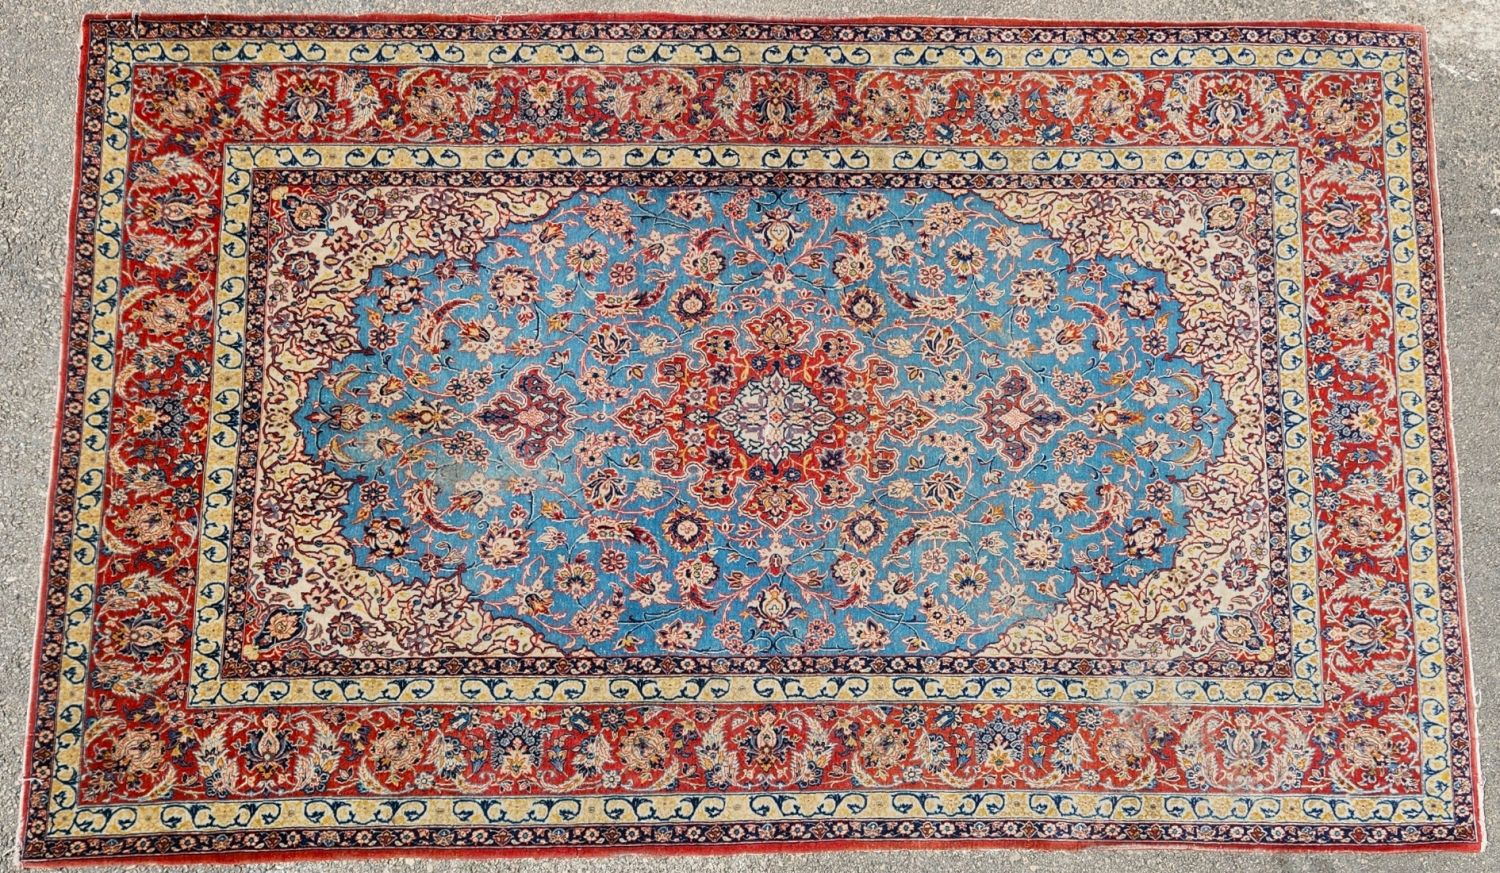 Handmade woven Persian rug, carpet size: 245X150 cm.